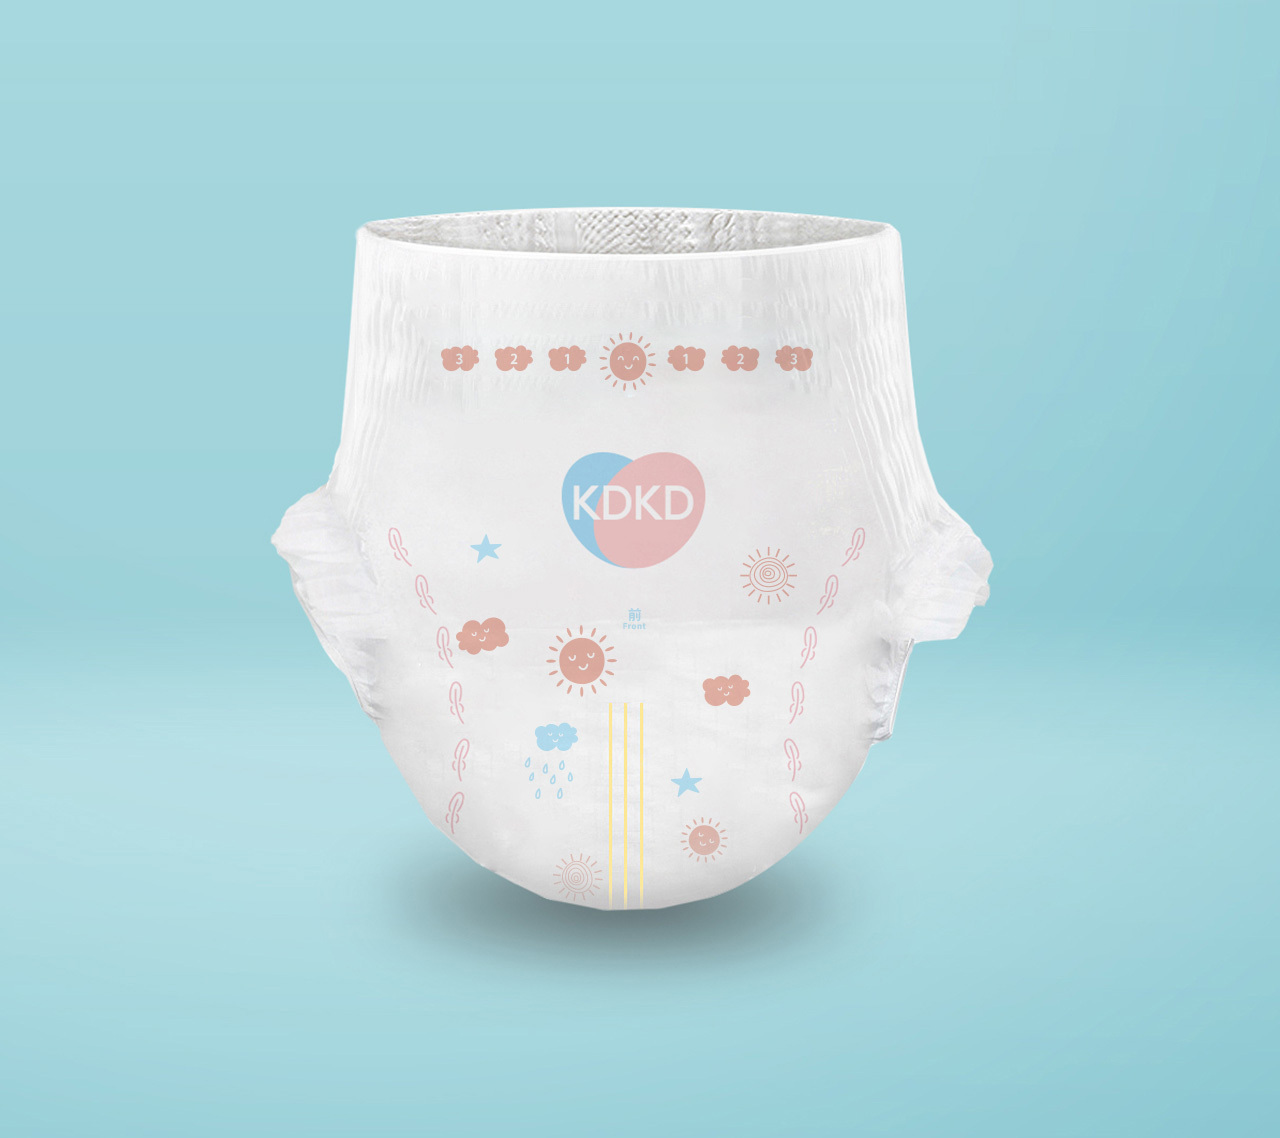 KDKD婴儿纸尿裤包装设计图8